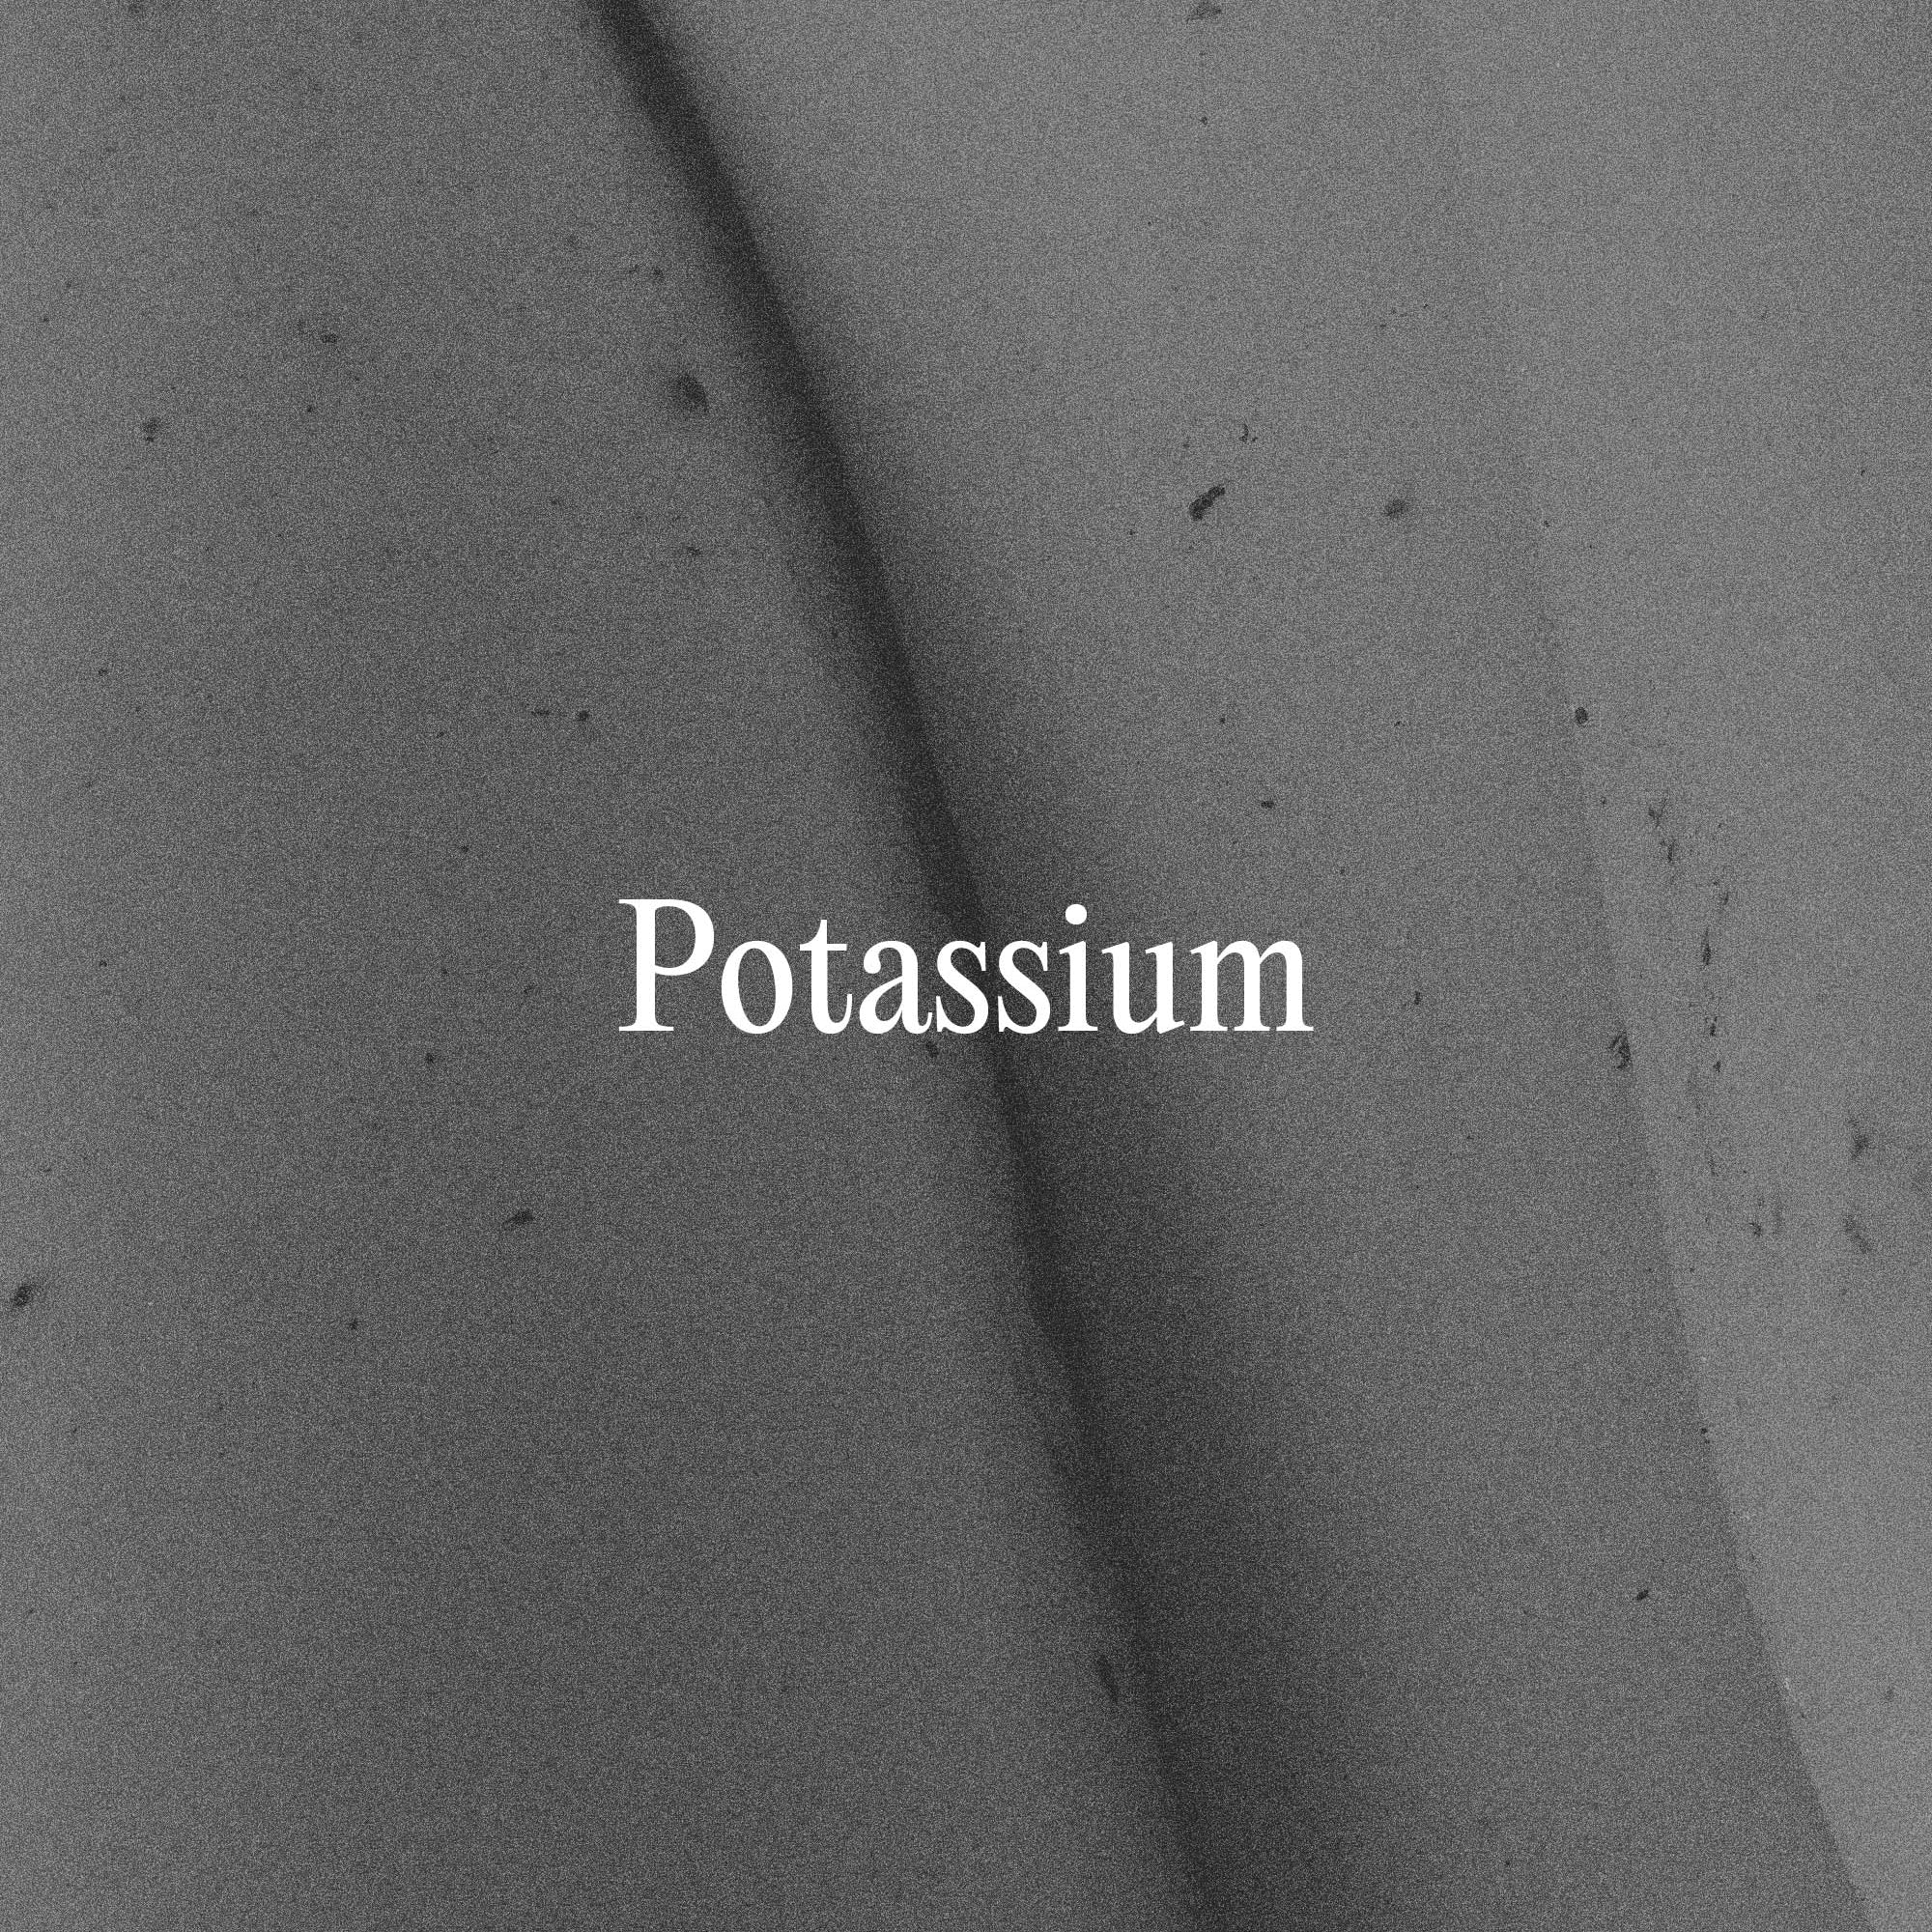 What is Potassium?